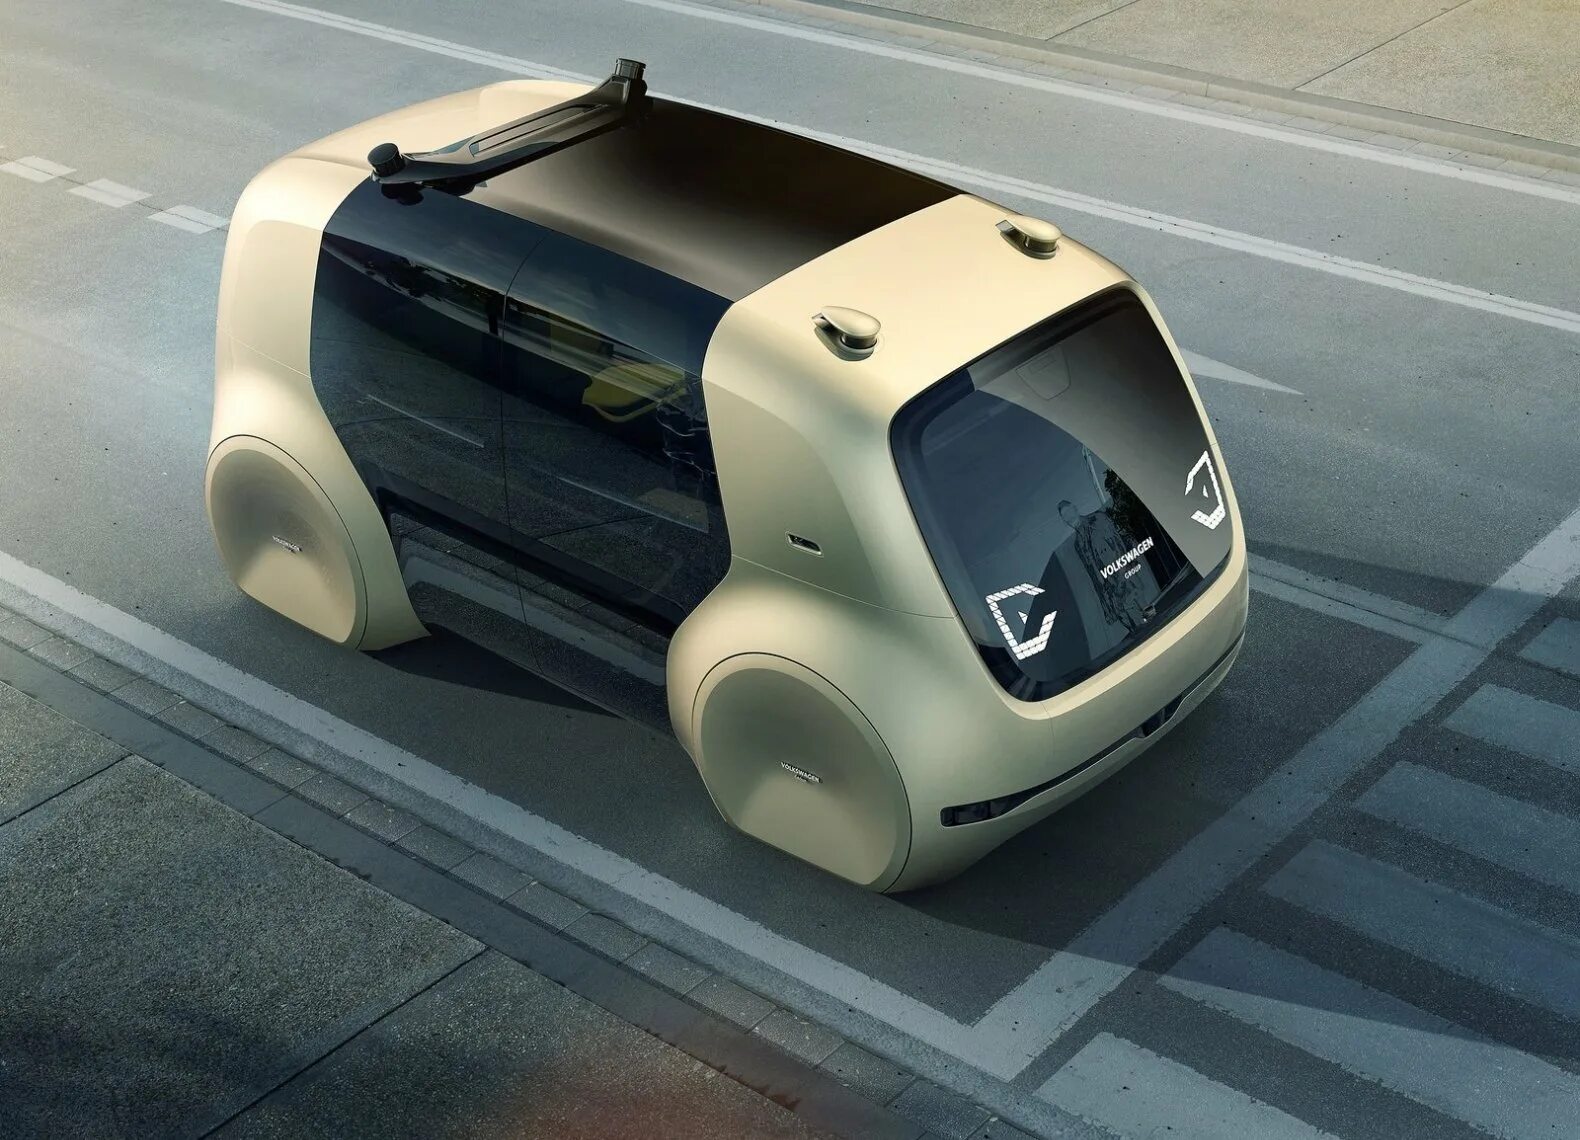 Volkswagen робот. Беспилотные автомобили Volkswagen Sedric. Концепт кар Volkswagen. Volkswagen Sedric Concept салон. VW l1 Concept капсула.